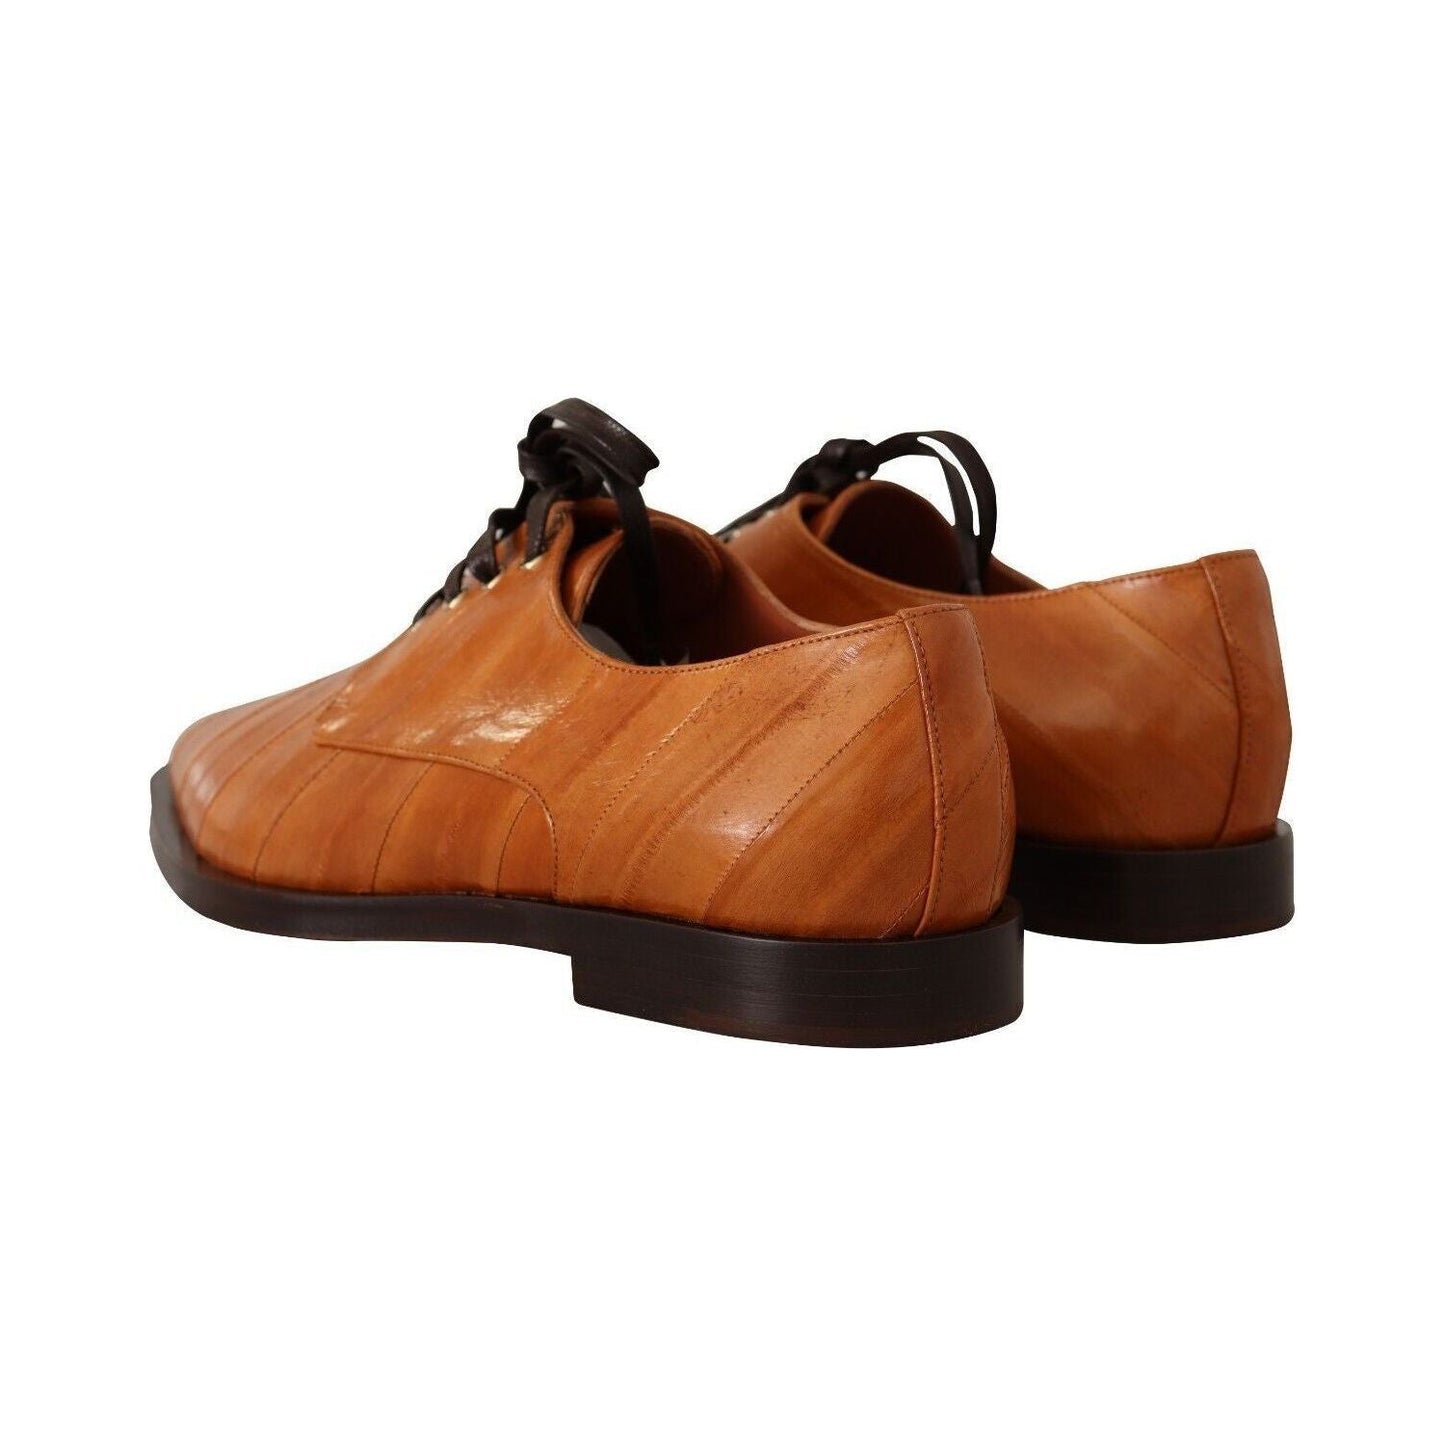 Dolce & Gabbana Elegant Eel Leather Lace-Up Formal Flats brown-eel-leather-lace-up-formal-shoes s-l1600-2-162-bb388c8b-b16.jpg